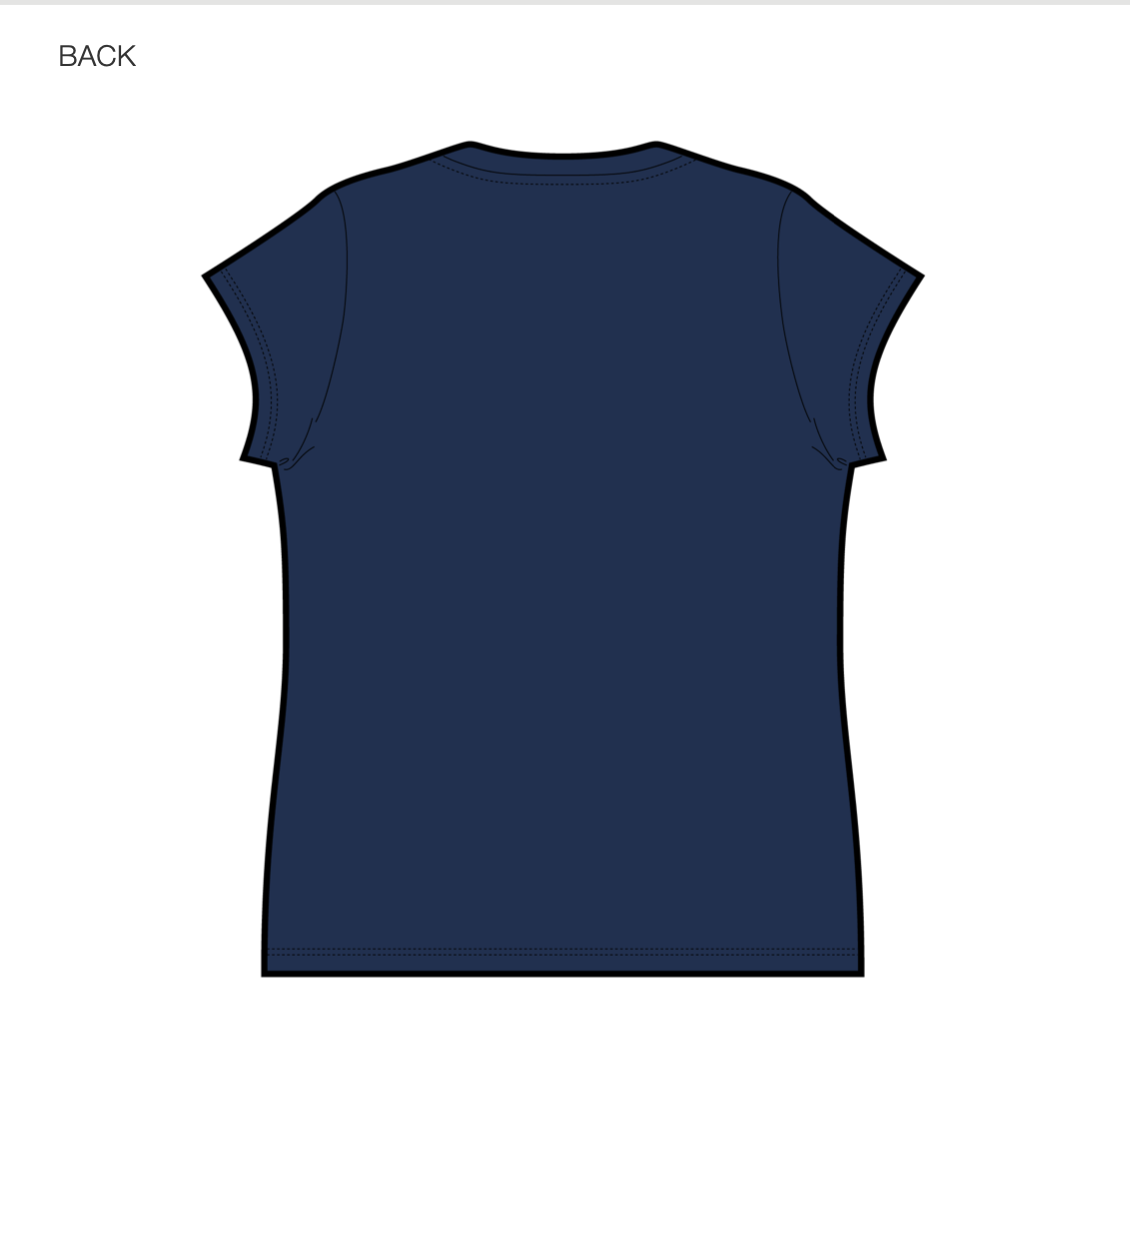 Bloom Tshirt Cap Sleeve in Navy Blue - Kindred Apparel